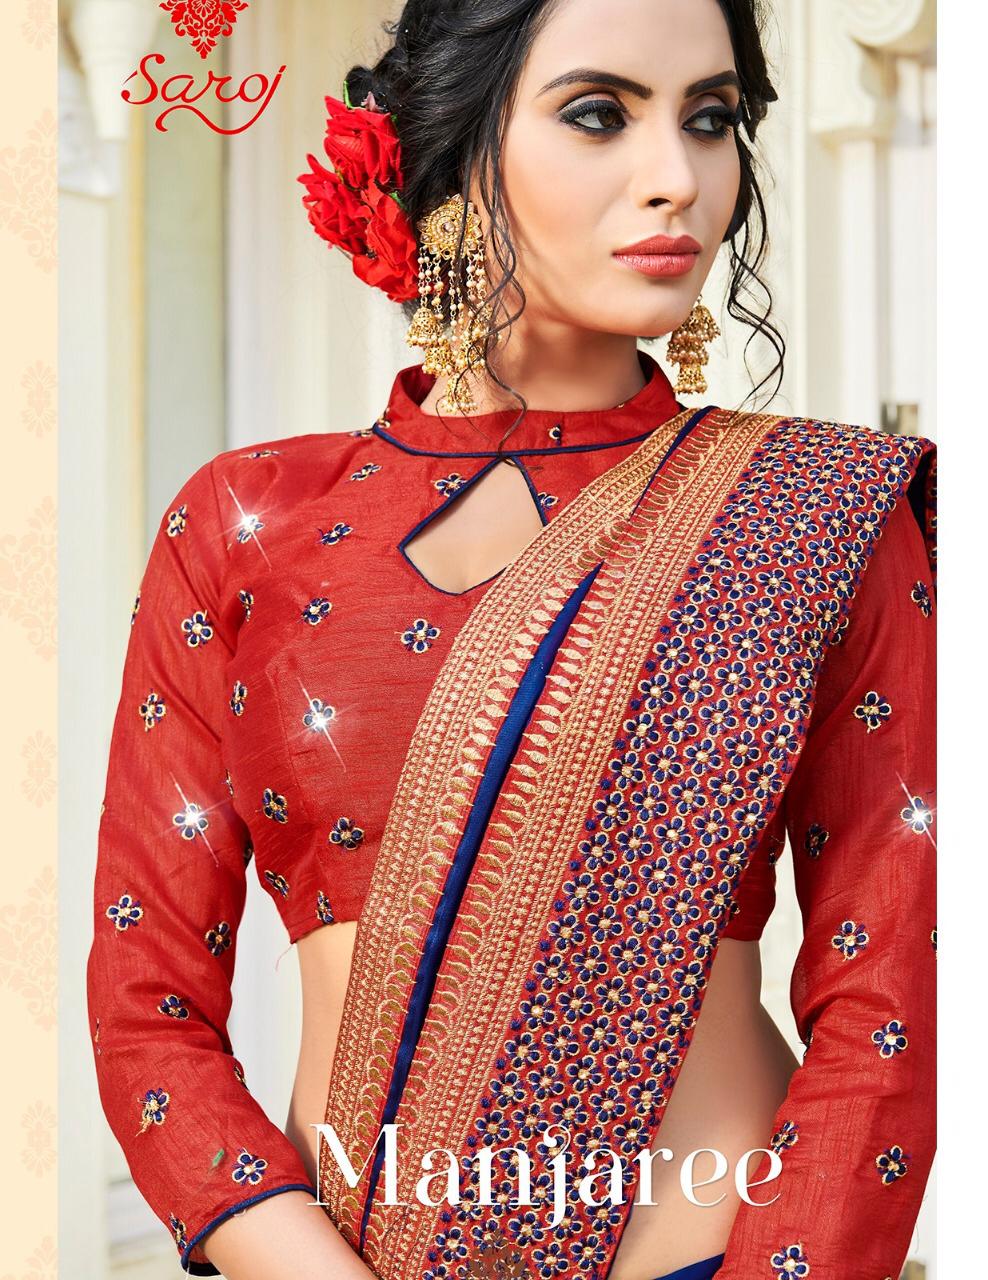 Saroj Manjaree Designer Rangoli Silk With Embroidery Work Pa...